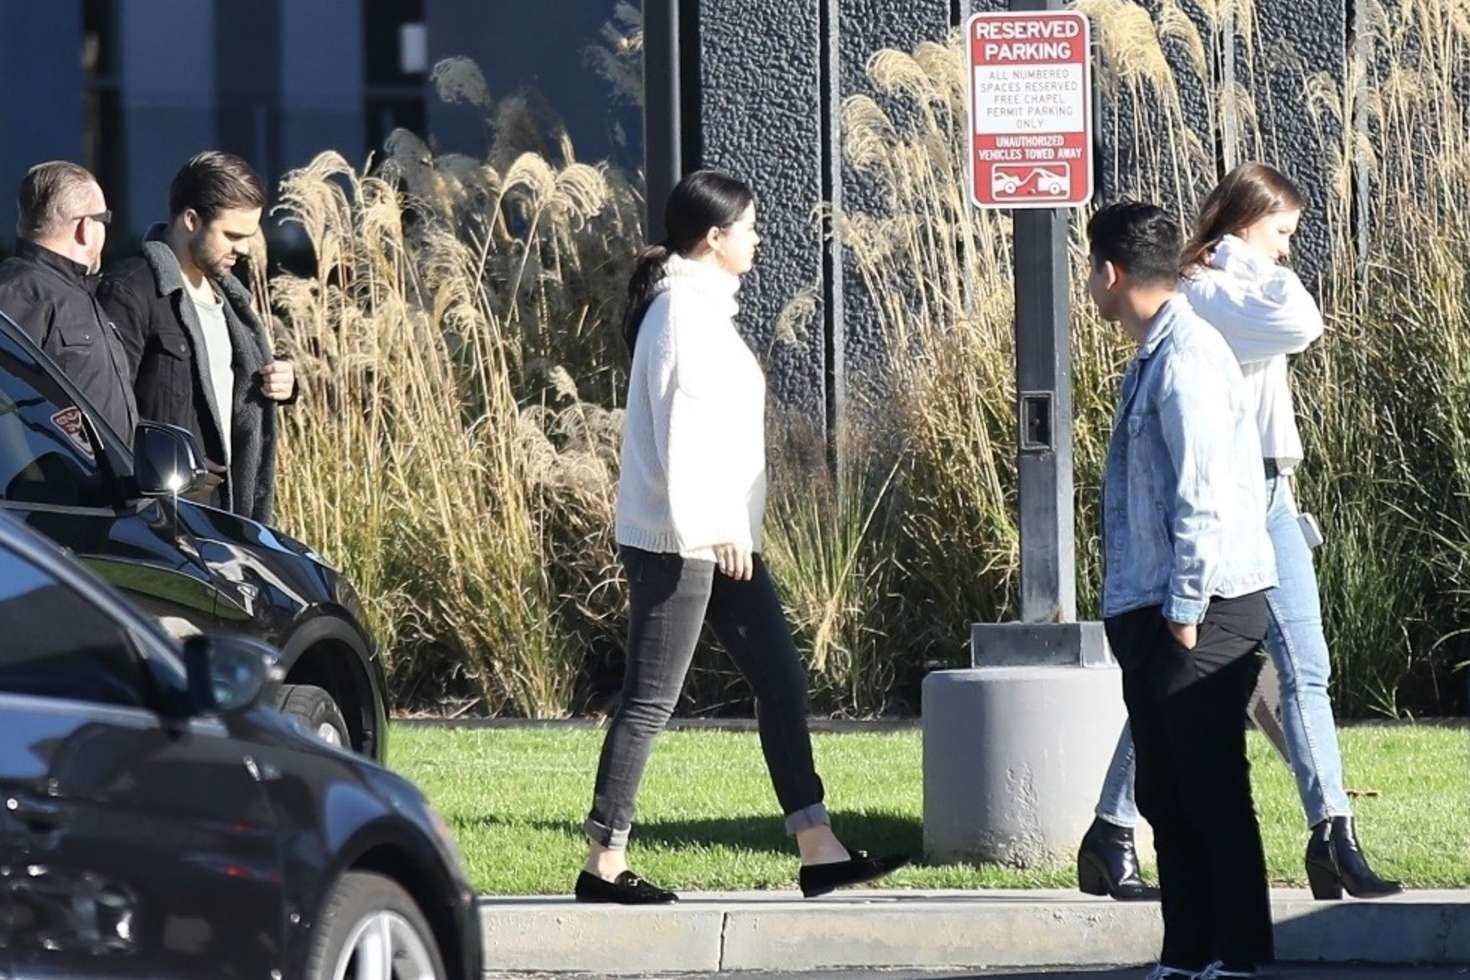 Selena Gomez â€“ Attends Sunday church services in Irvine